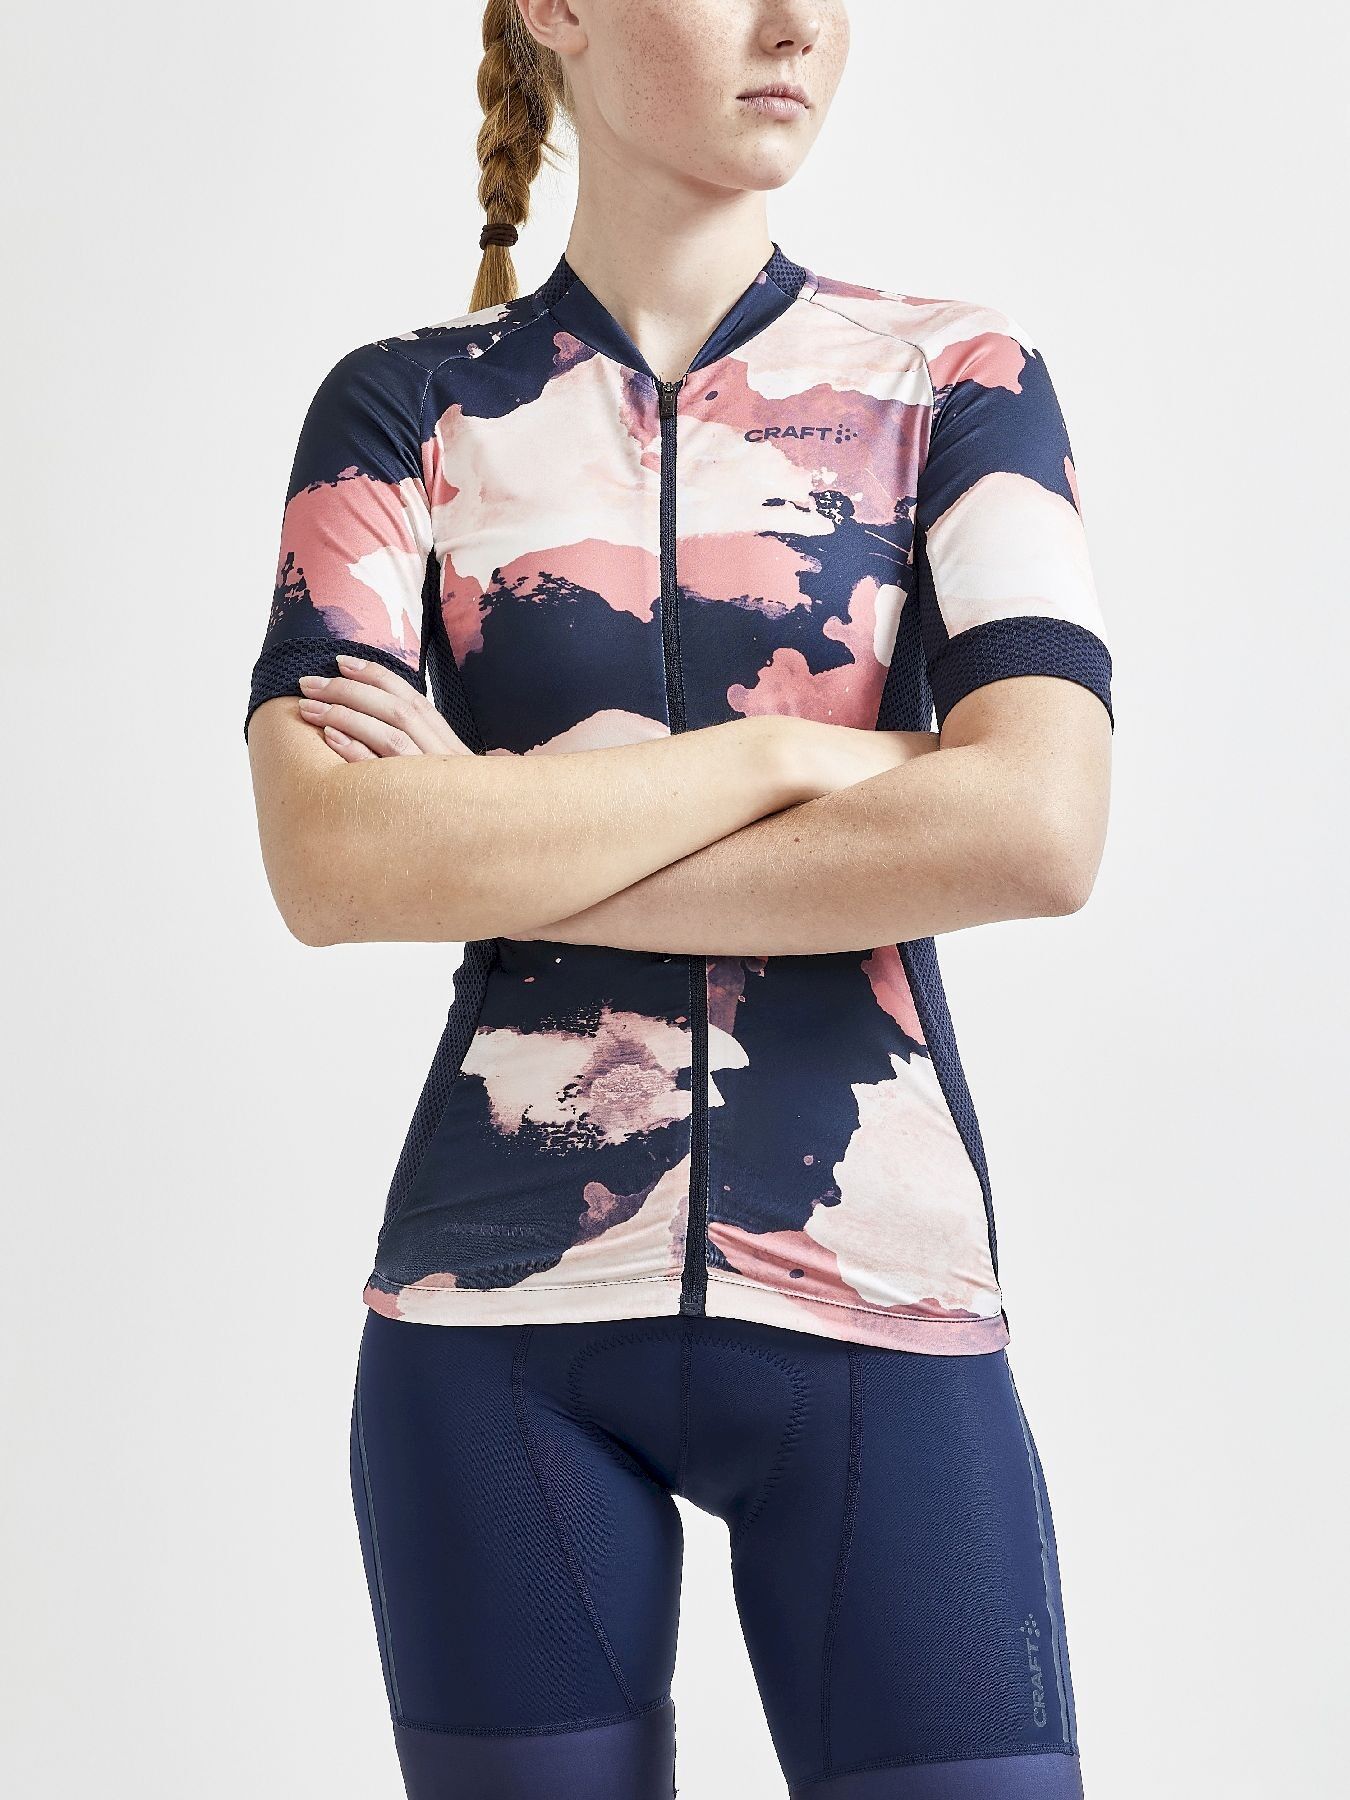 Craft Adv Endurance Graphic Jersey - Cycling jersey - Women's